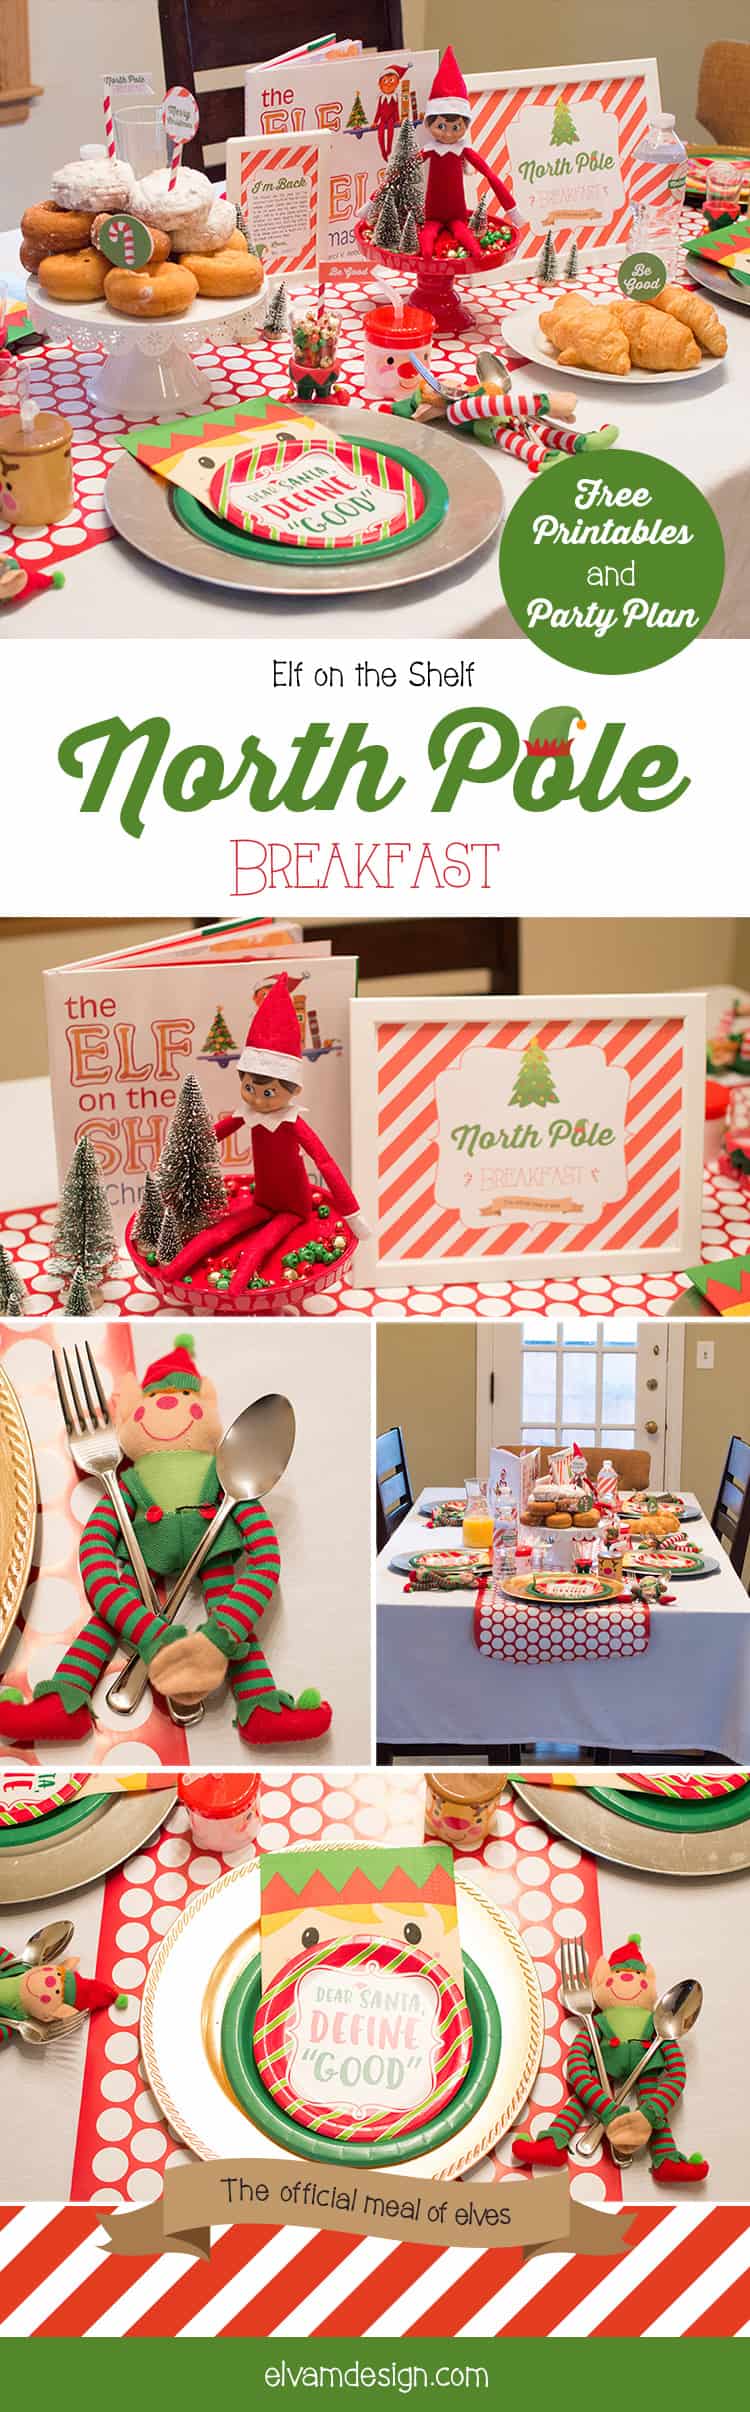 Elf On The Shelf North Pole Breakfast Elva M Design Studio